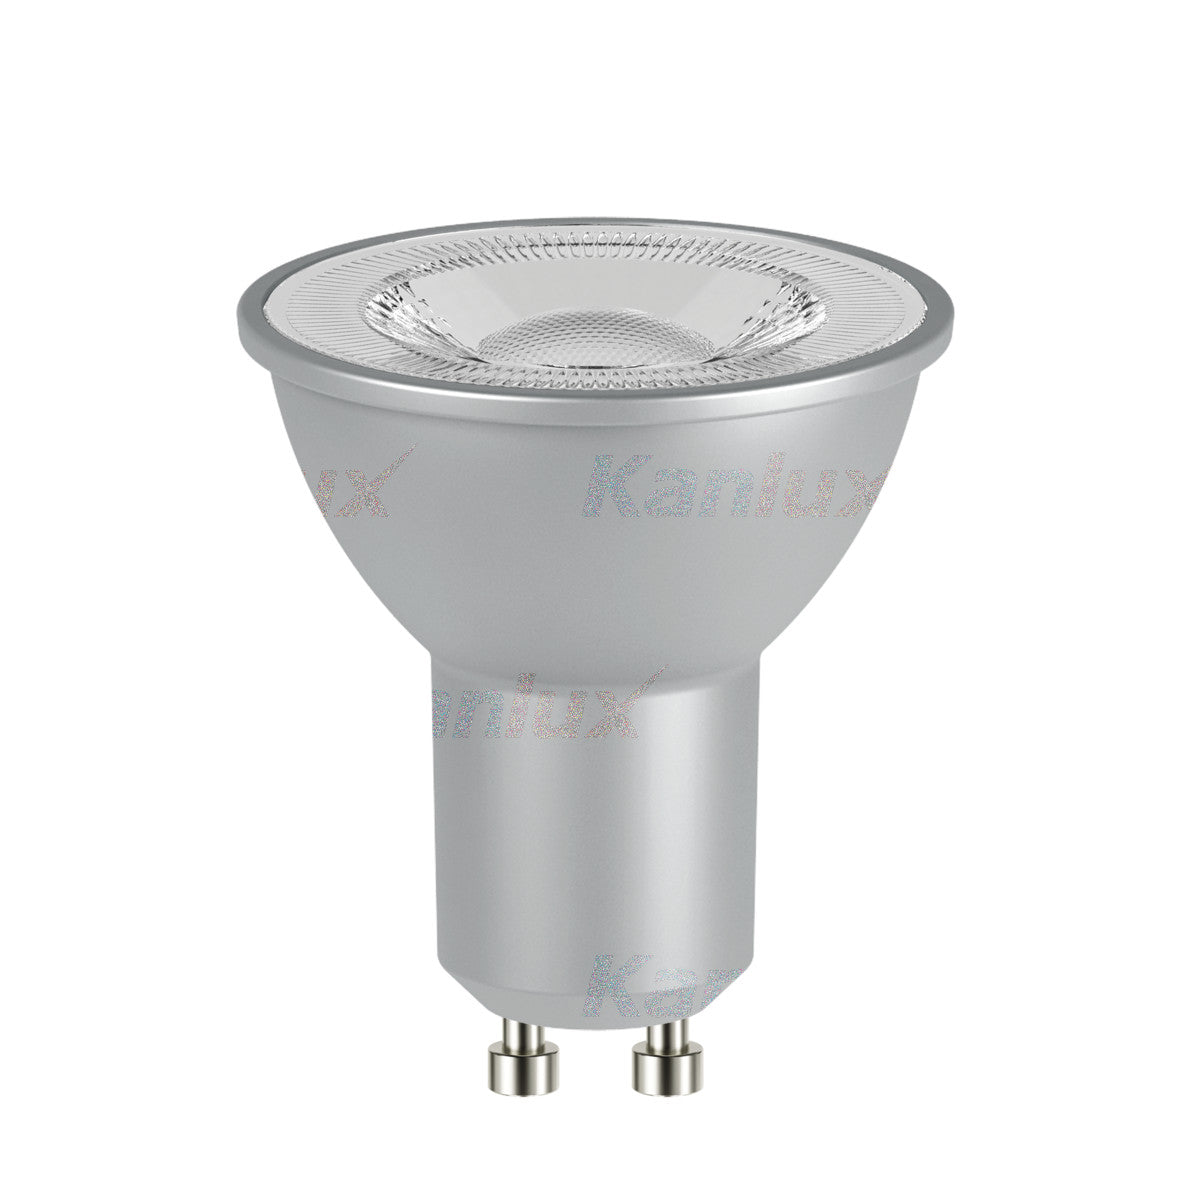 Kanlux IQ-LED GU10 7W LED Light Bulb Small Angle PAR16 Energy Saving